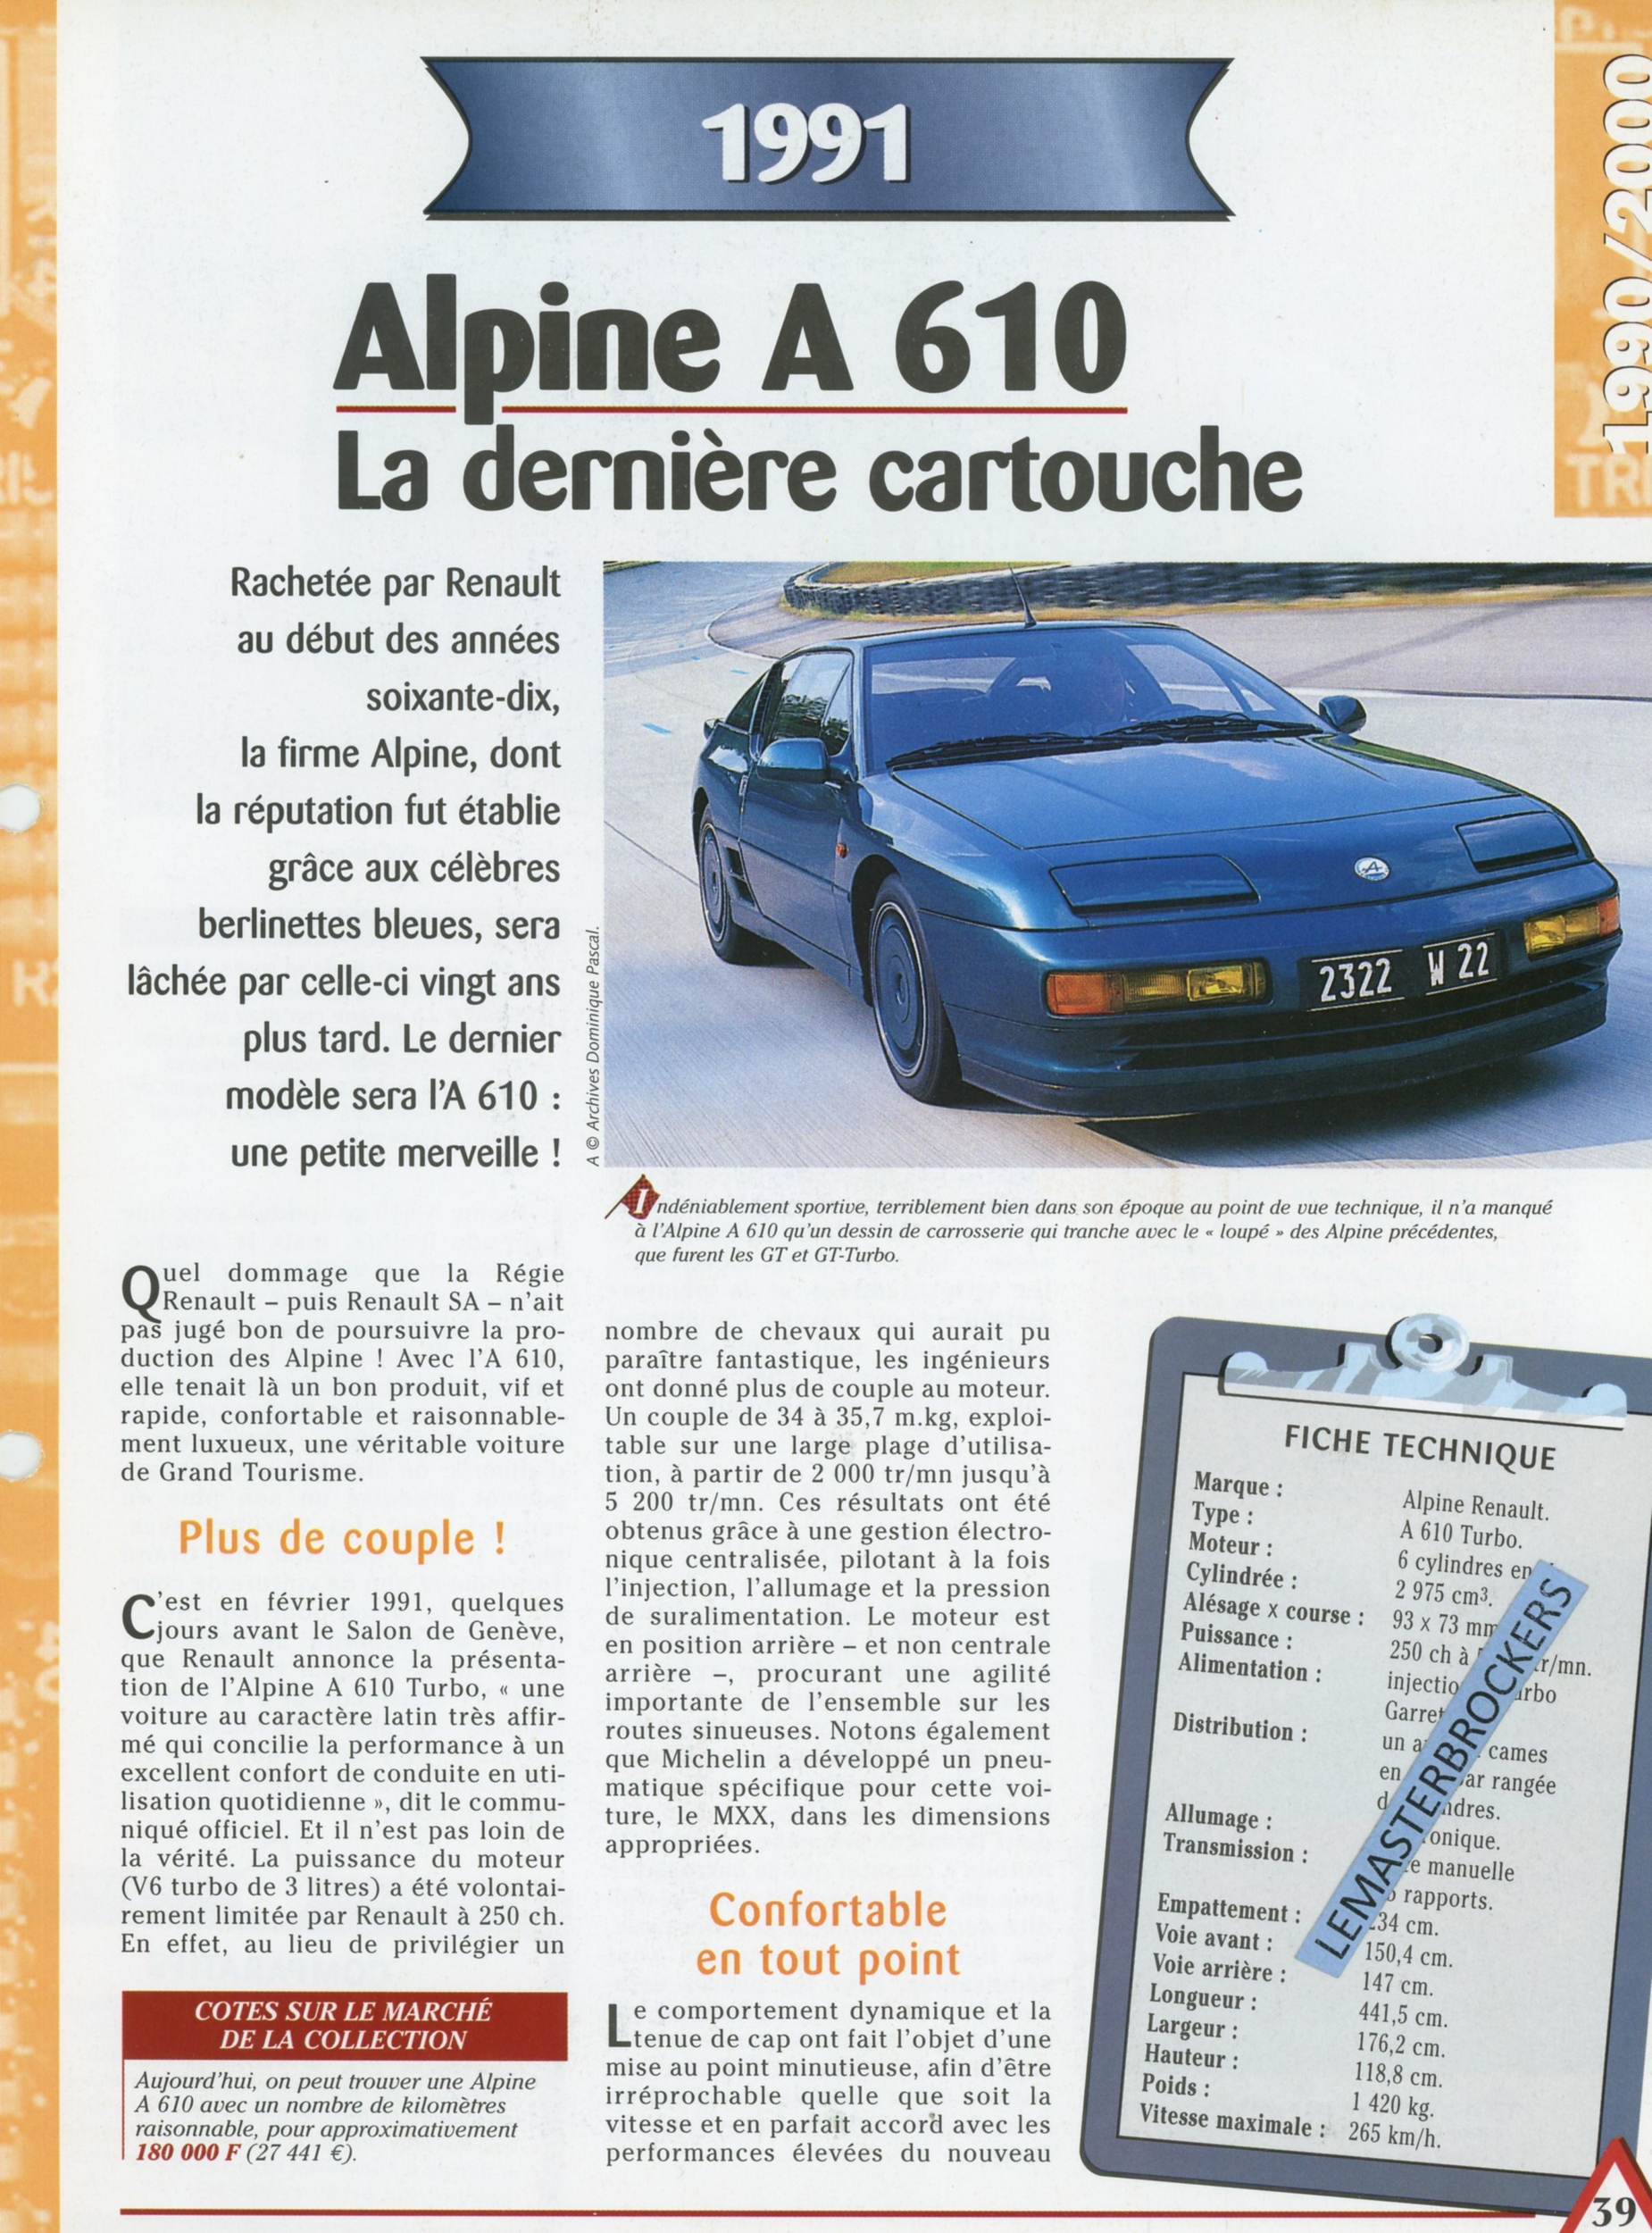 FICHE TECHNIQUE ALPINE A610 - FICHE AUTO - HACHETTE LITTÉRATURE AUTOMOBILE